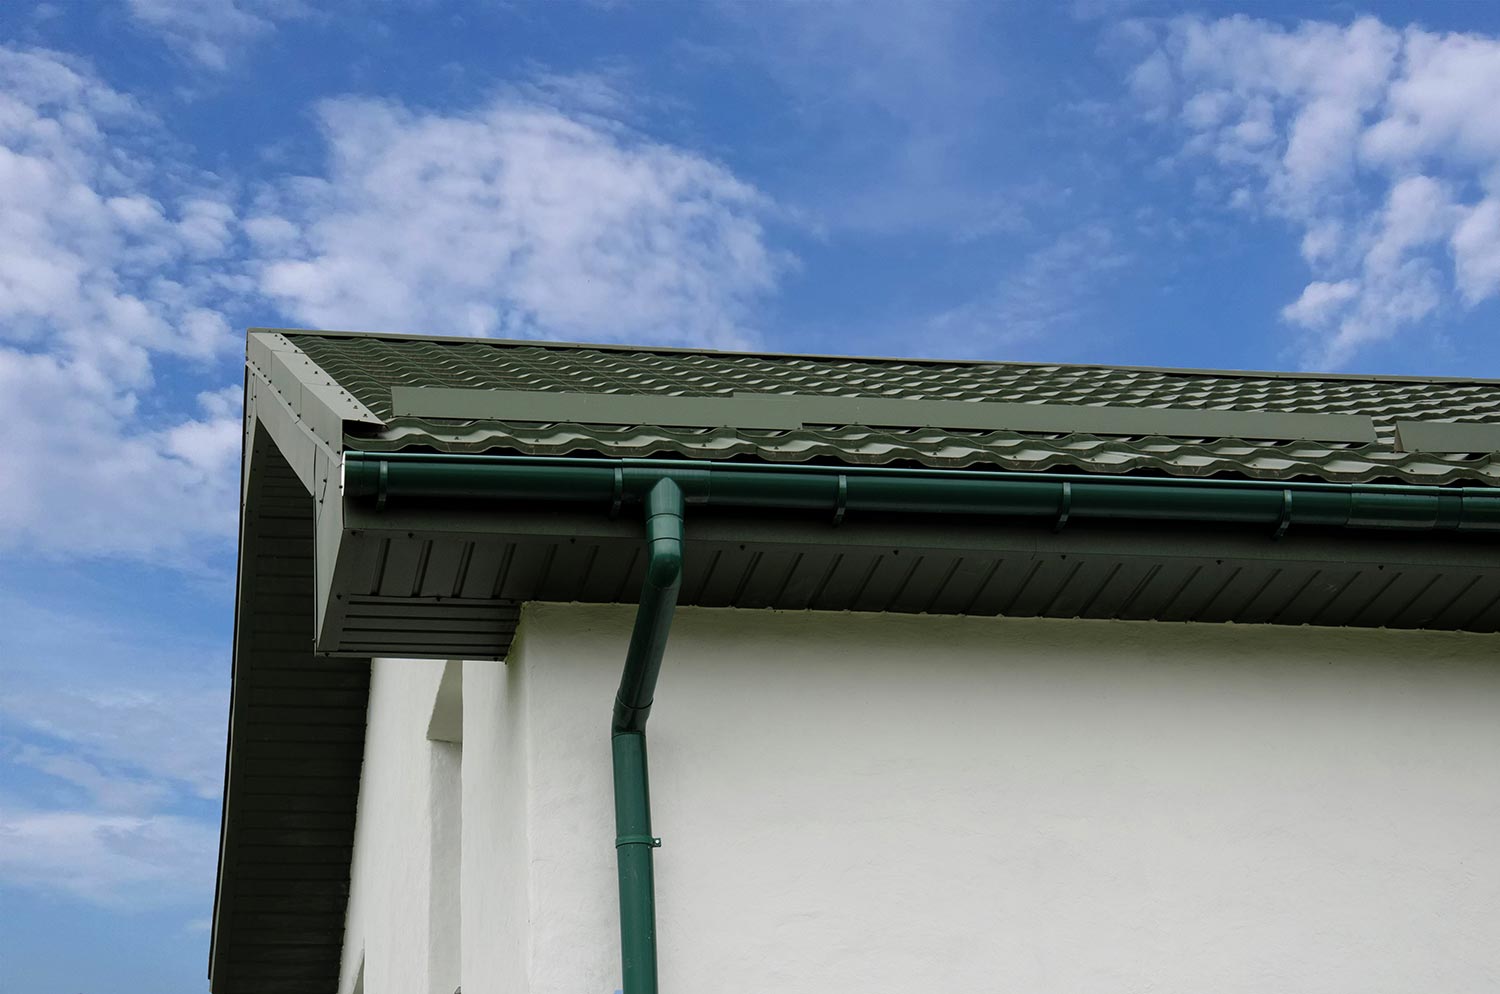 Metal roof tile with plastic gutter system against blue sky